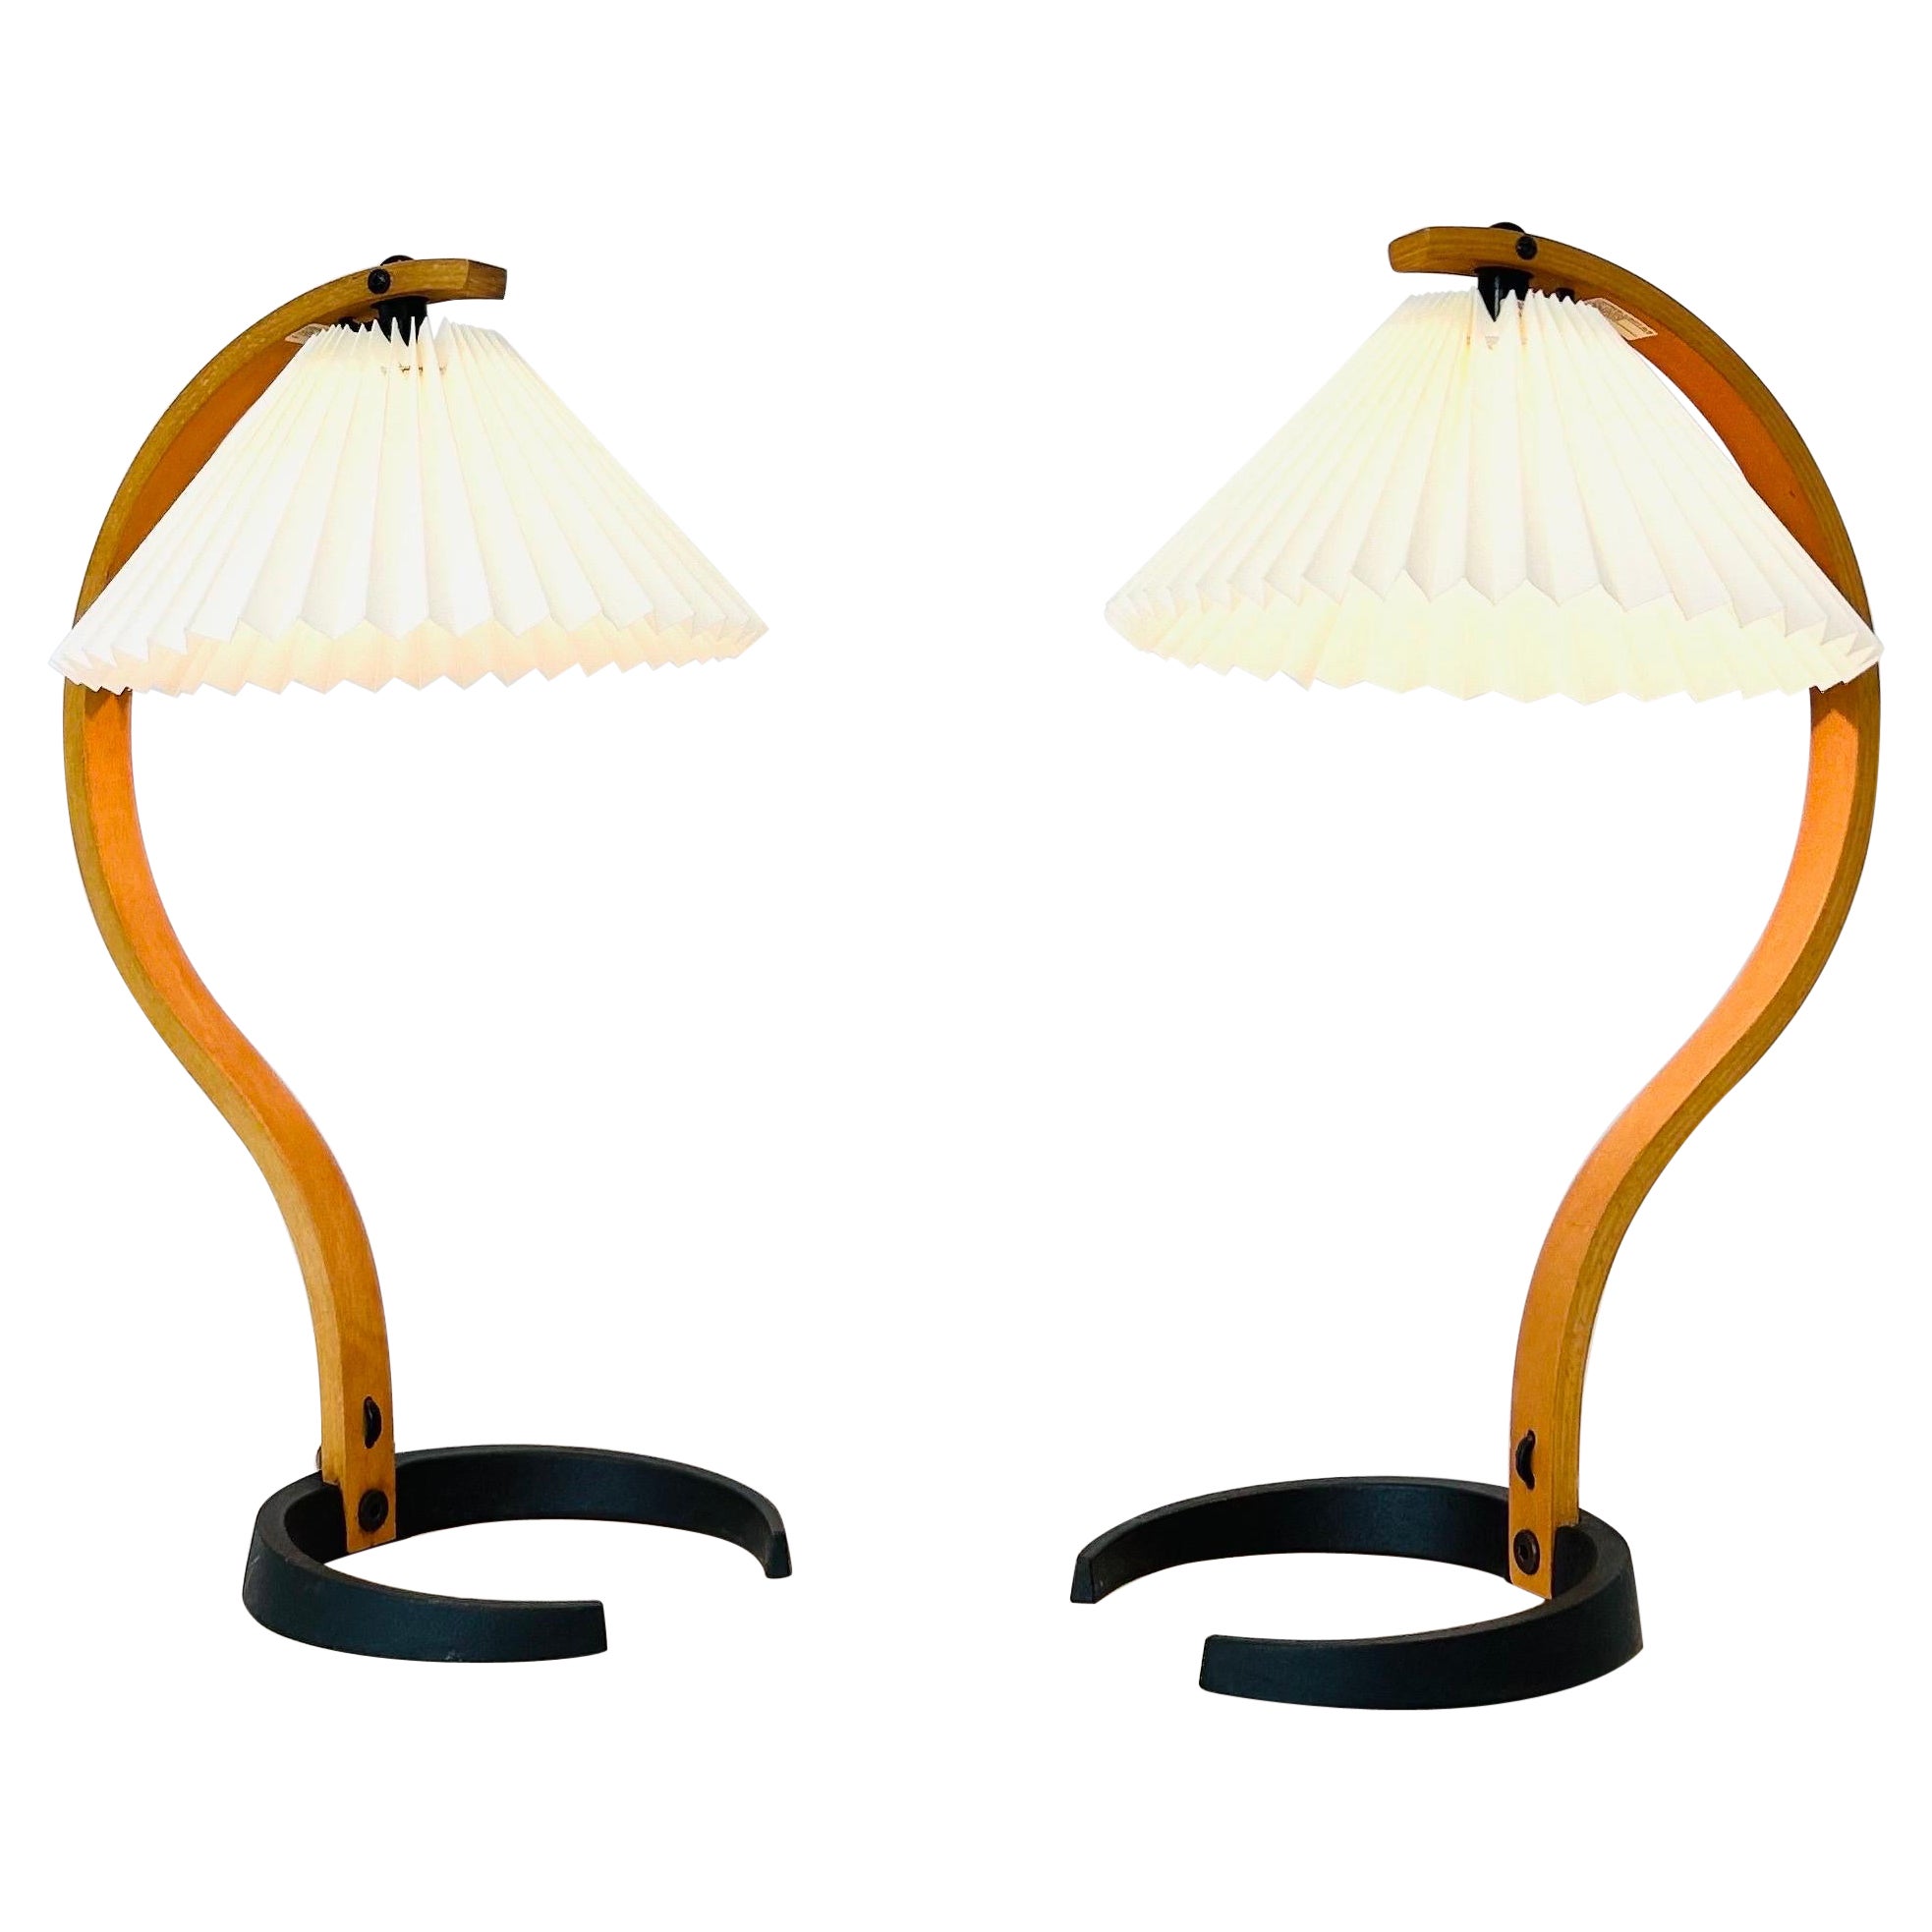 Set of Original Danish Caprani Desk Lamps, 1970s, Denmark For Sale